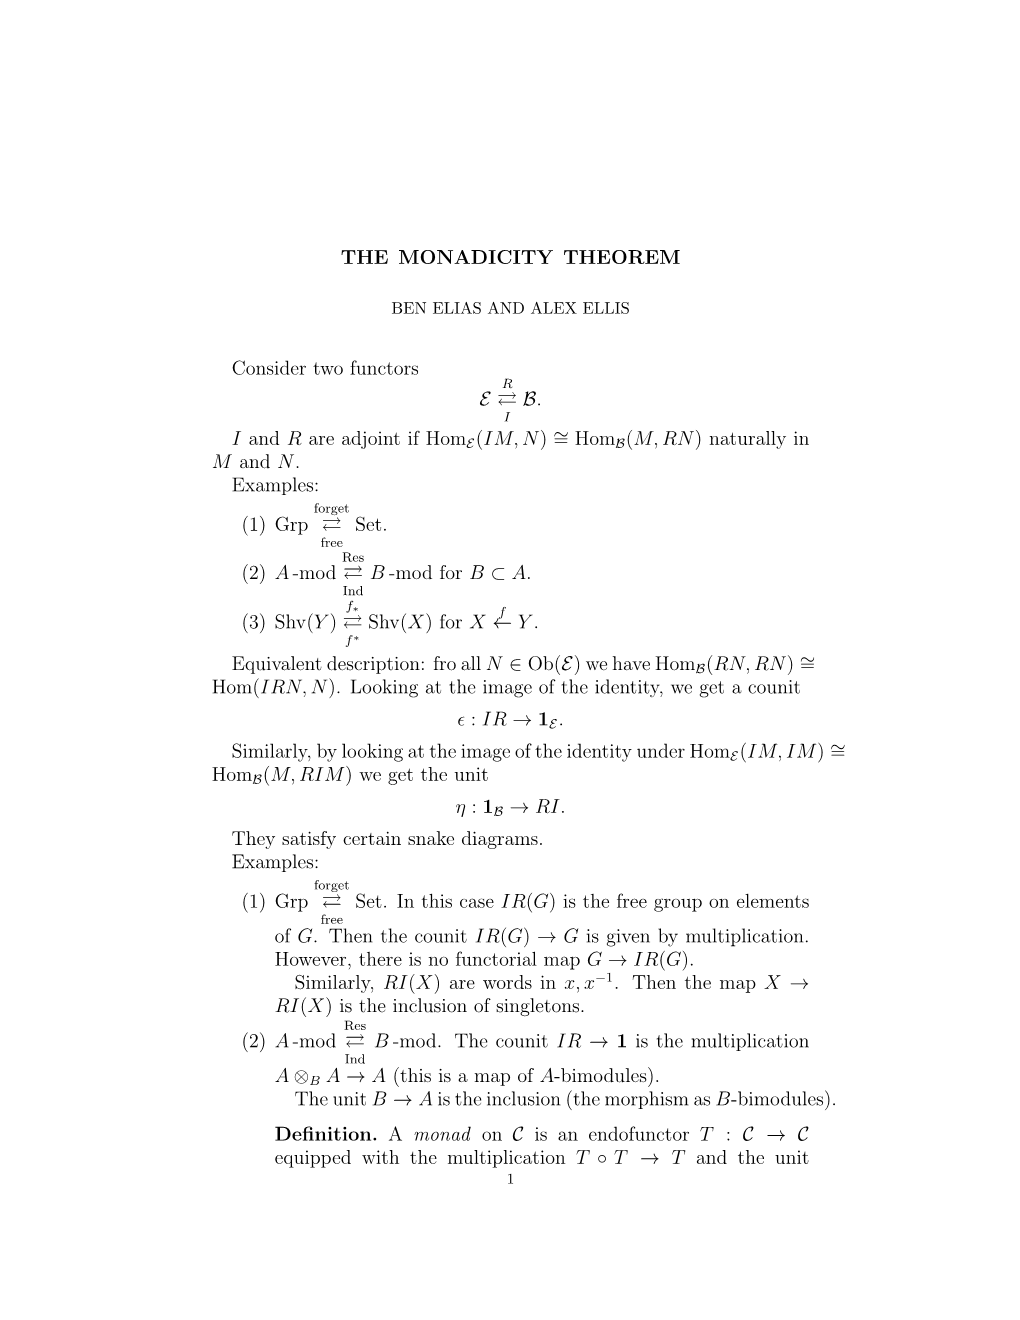 THE MONADICITY THEOREM Consider Two Functors E ⇄ B. I And